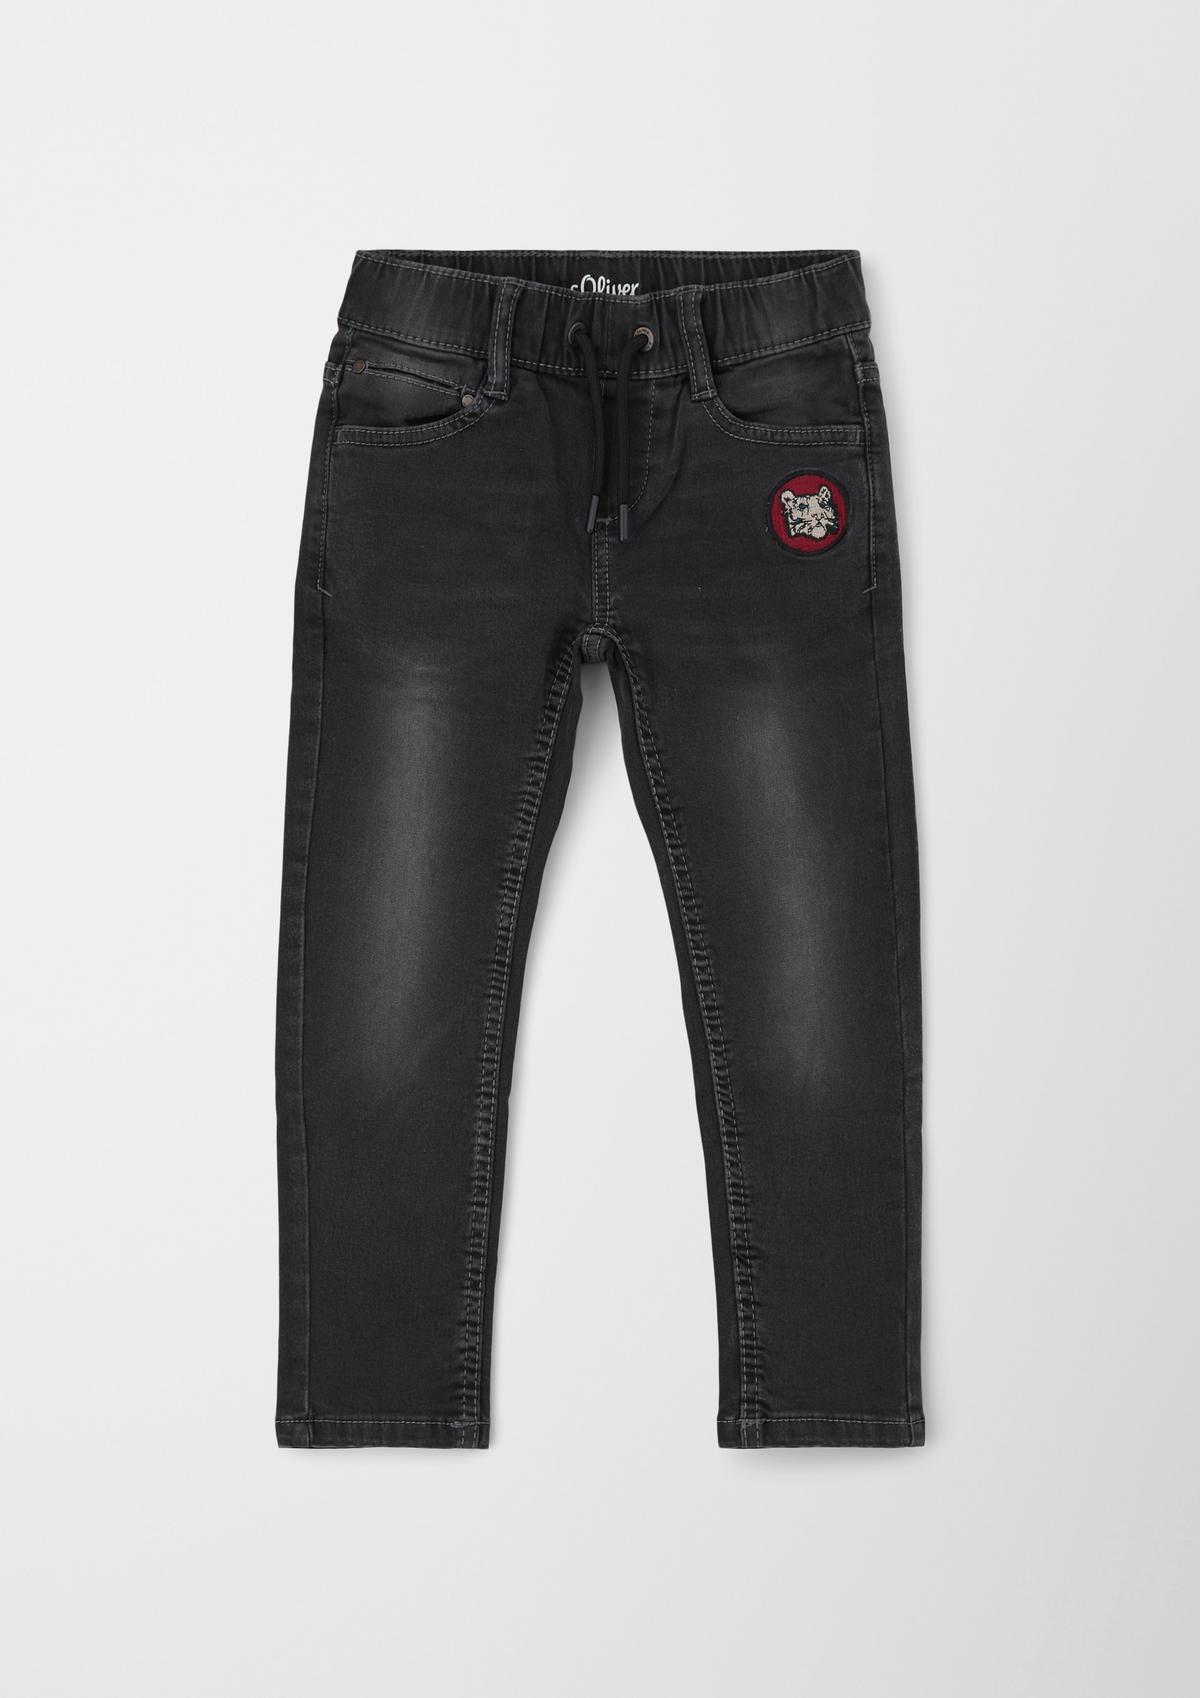 s.Oliver Brad jeans / slim fit / mid rise / slim leg